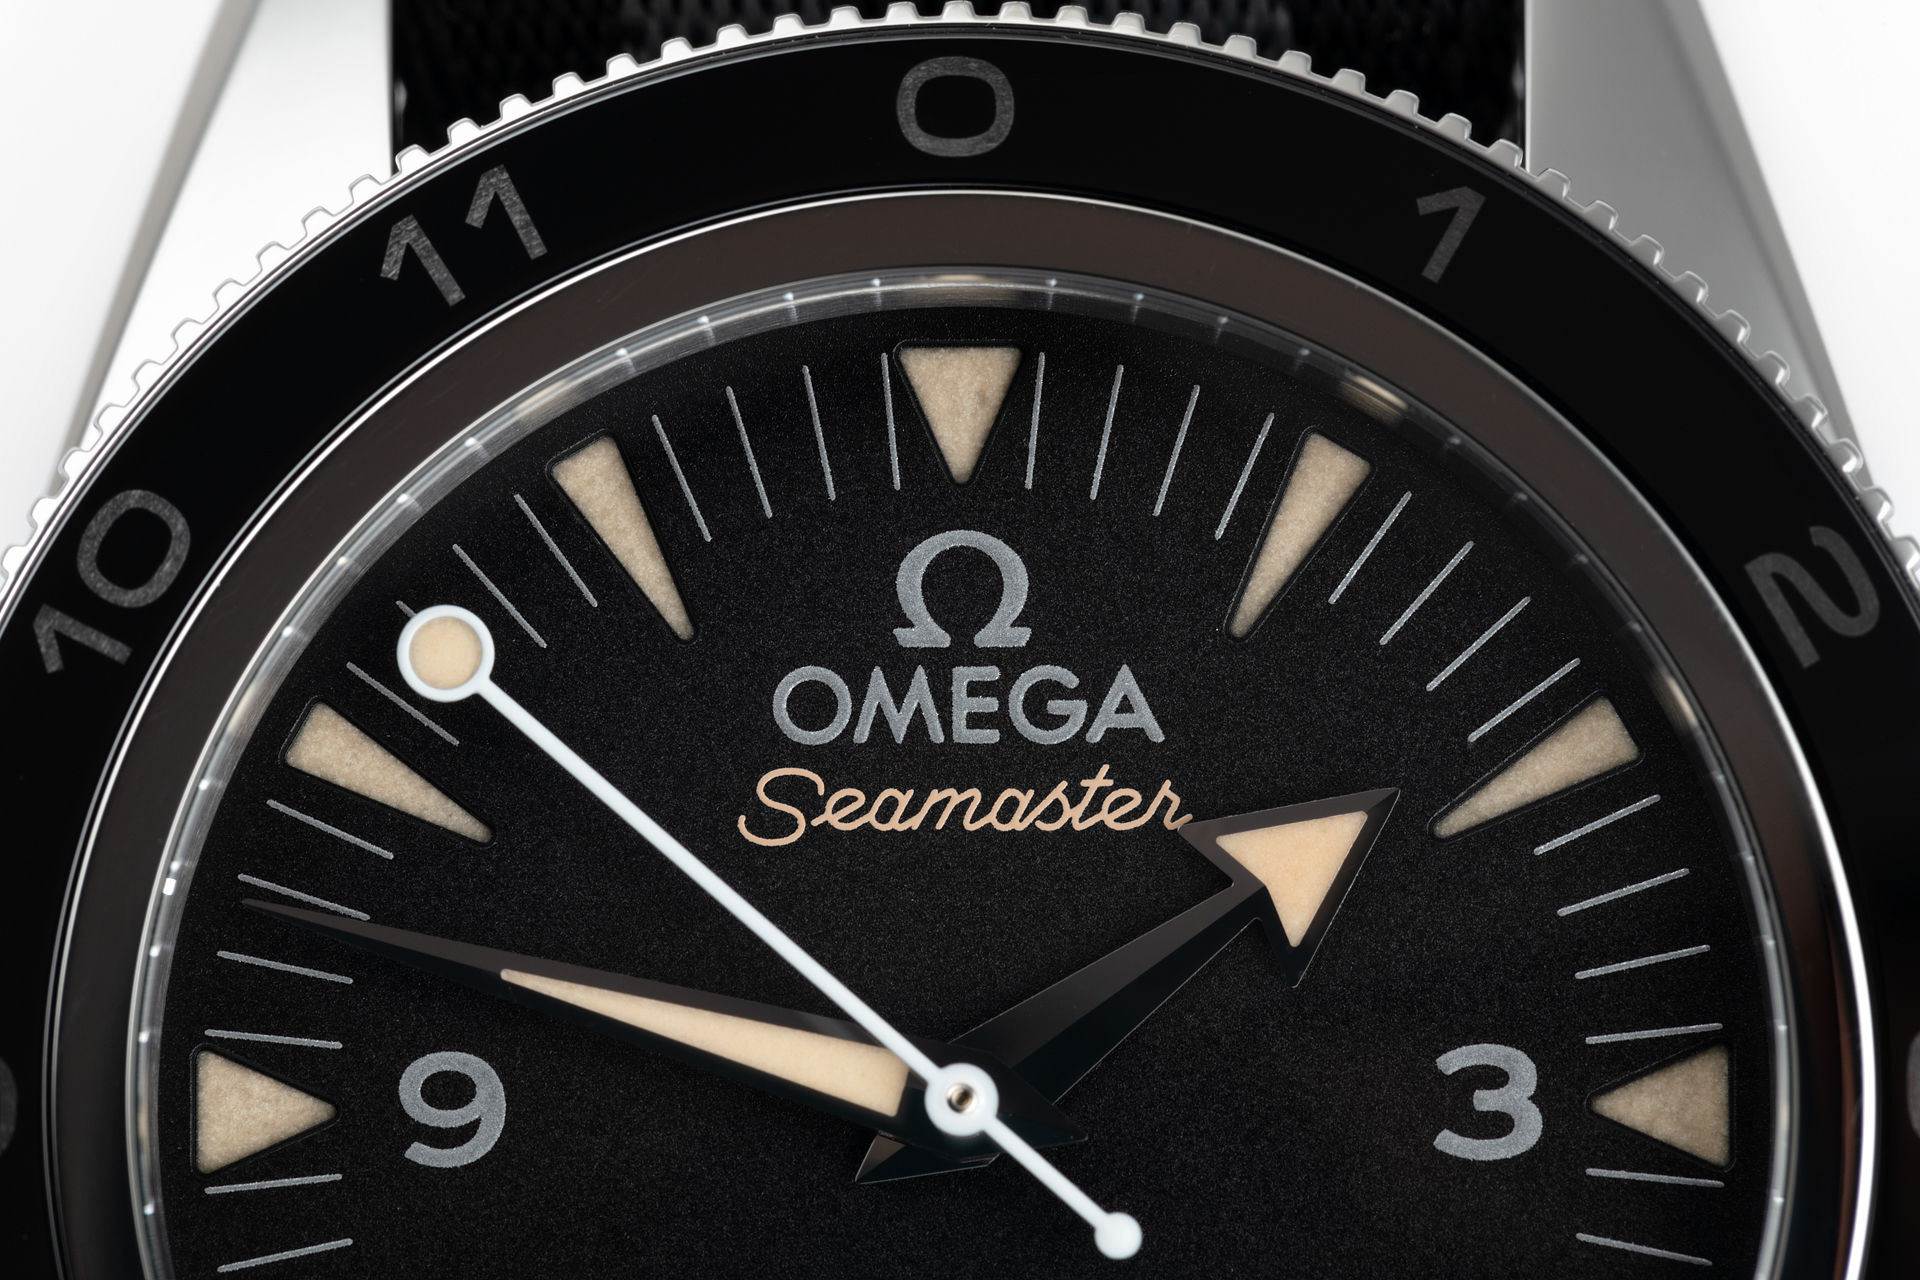 ref 233.32.41.21.01.001 | Limited Edition 'Omega Warranty' | Omega Seamaster Spectre